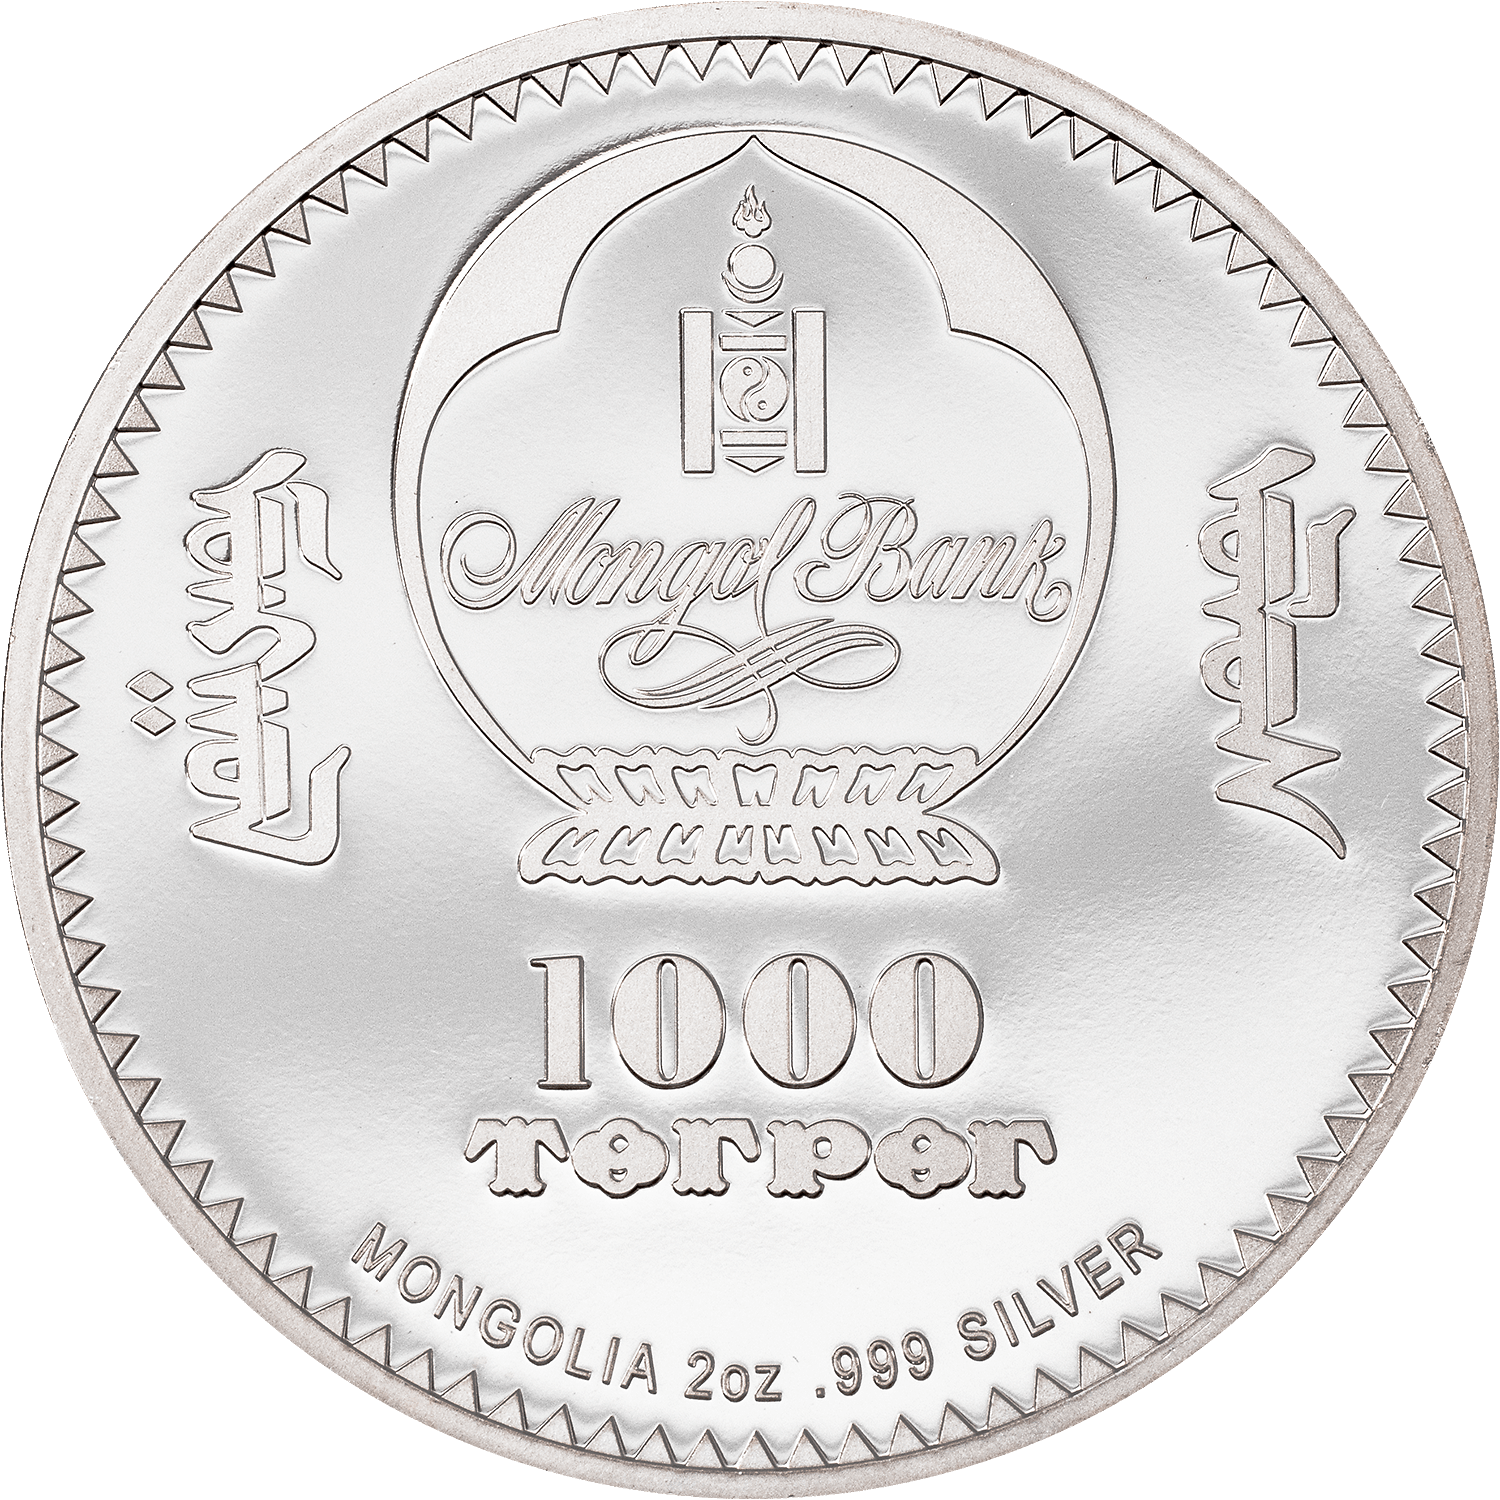 ROSEBUD FABERGE EGG Peter Carl 2 Oz Silver Coin 1000 Togrog Mongolia 2022 - PARTHAVA COIN